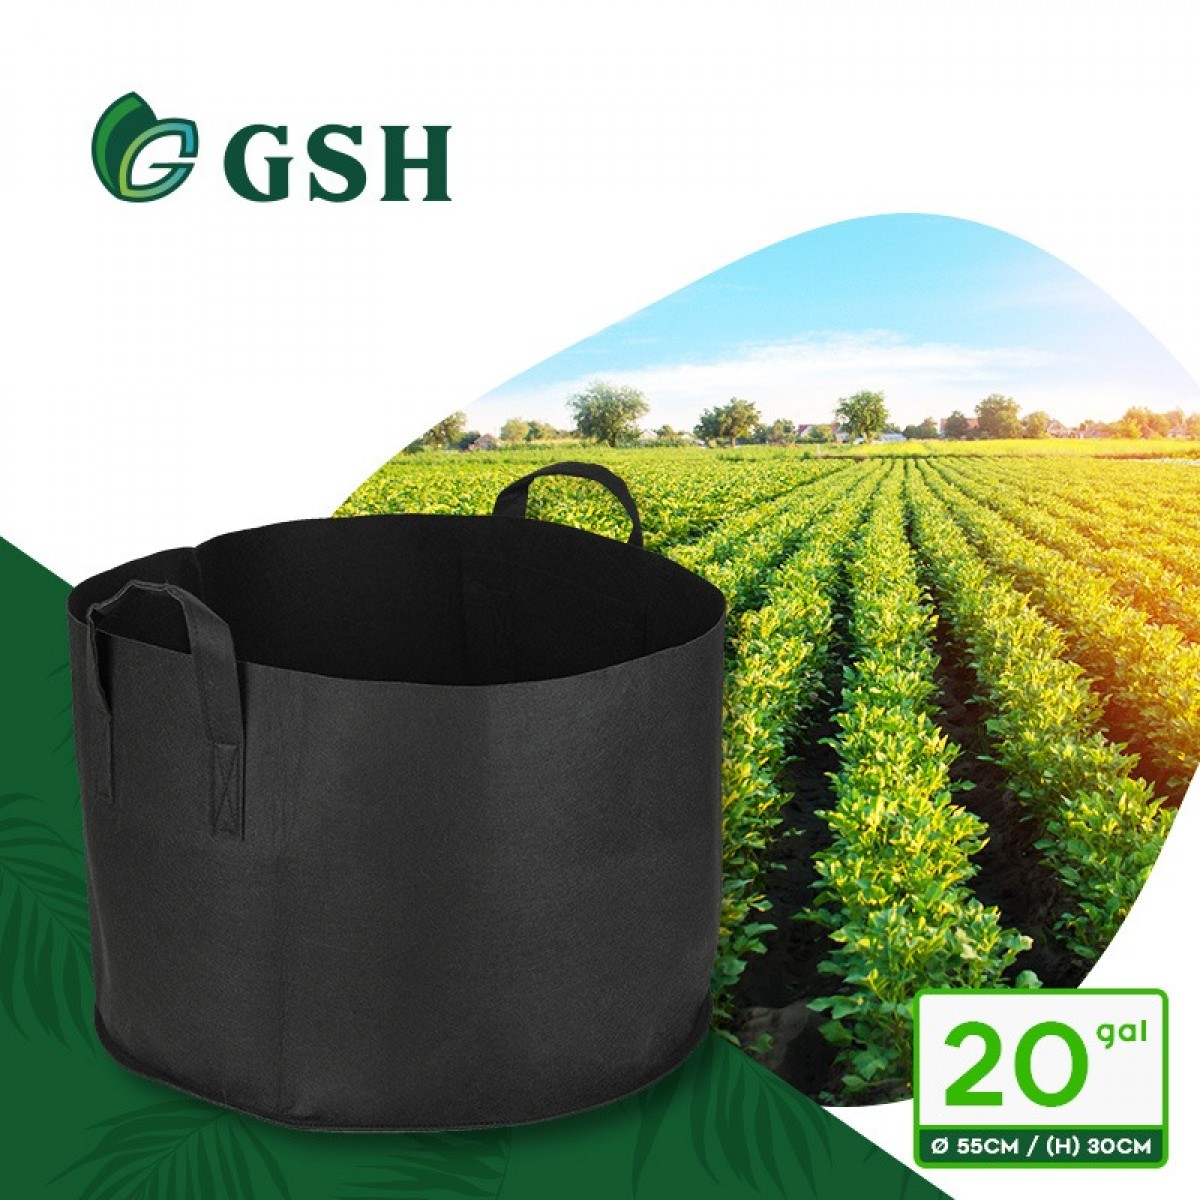 GSH Gardener's Grow Bag (20Gal)